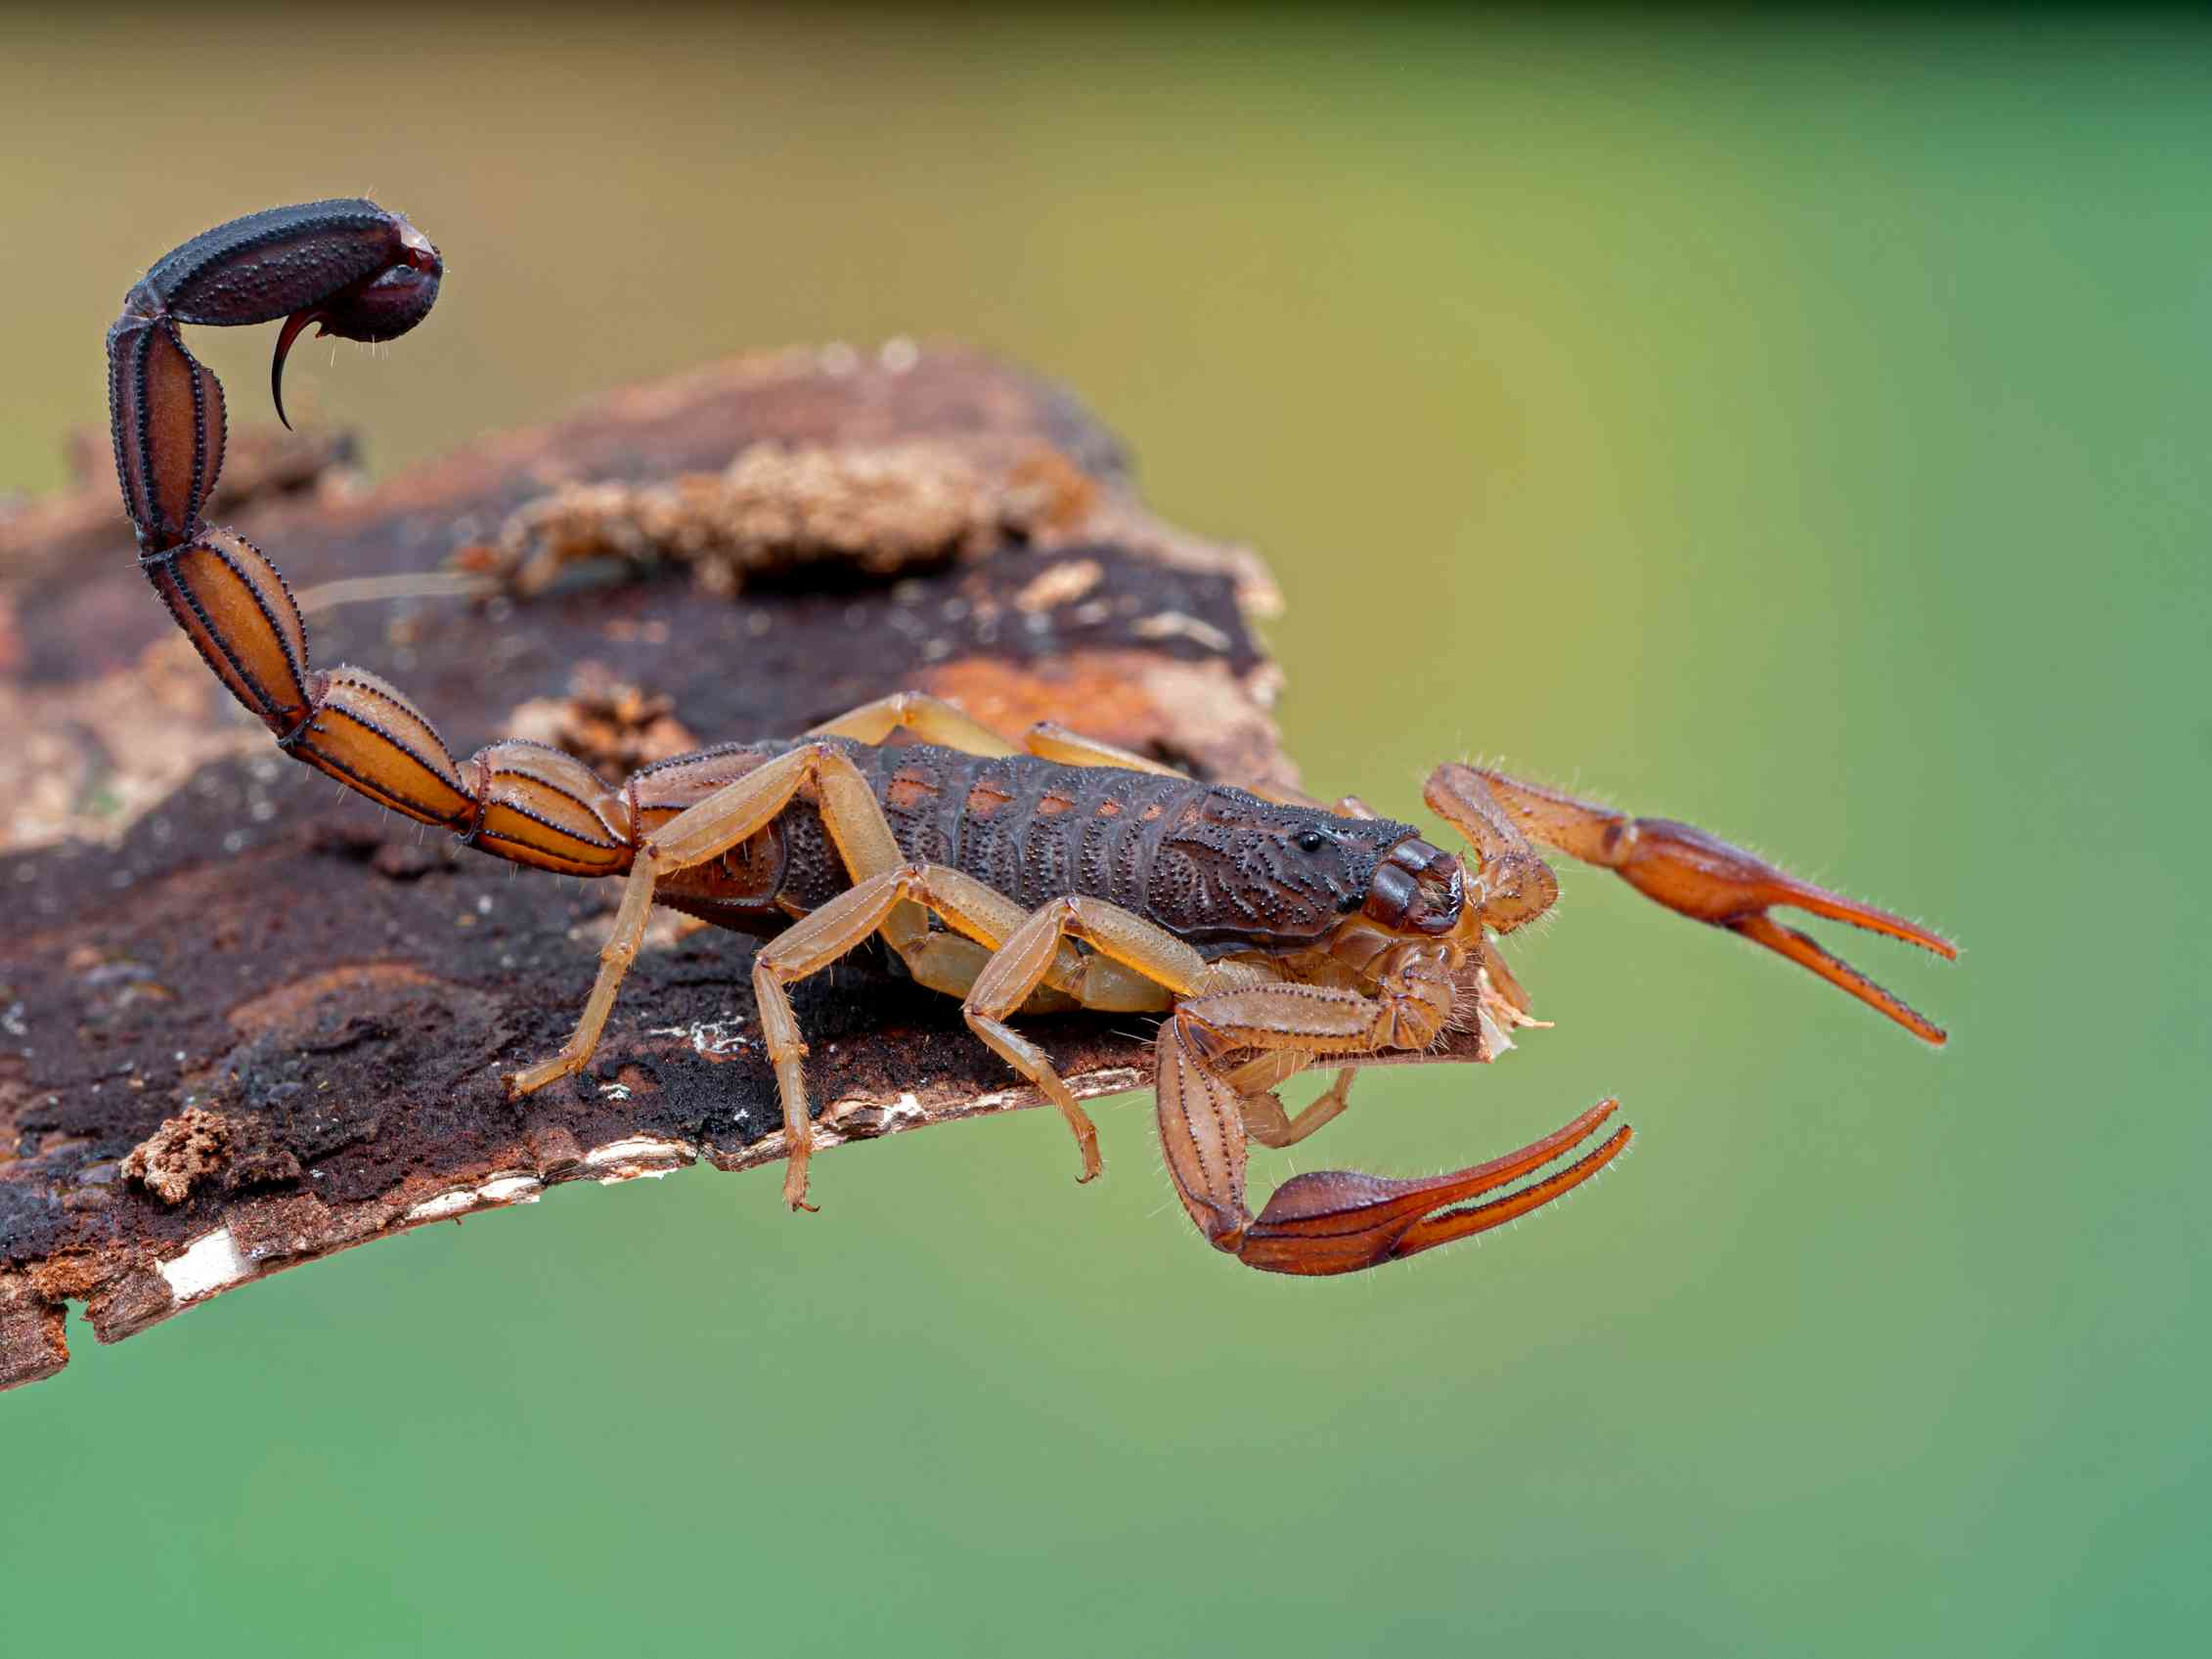 Animals scorpions. Стрипедтальский Скорпион. Желтый толстохвостый Скорпион. Арабский толстохвостый Скорпион. Паукообразные отряд Скорпионы.